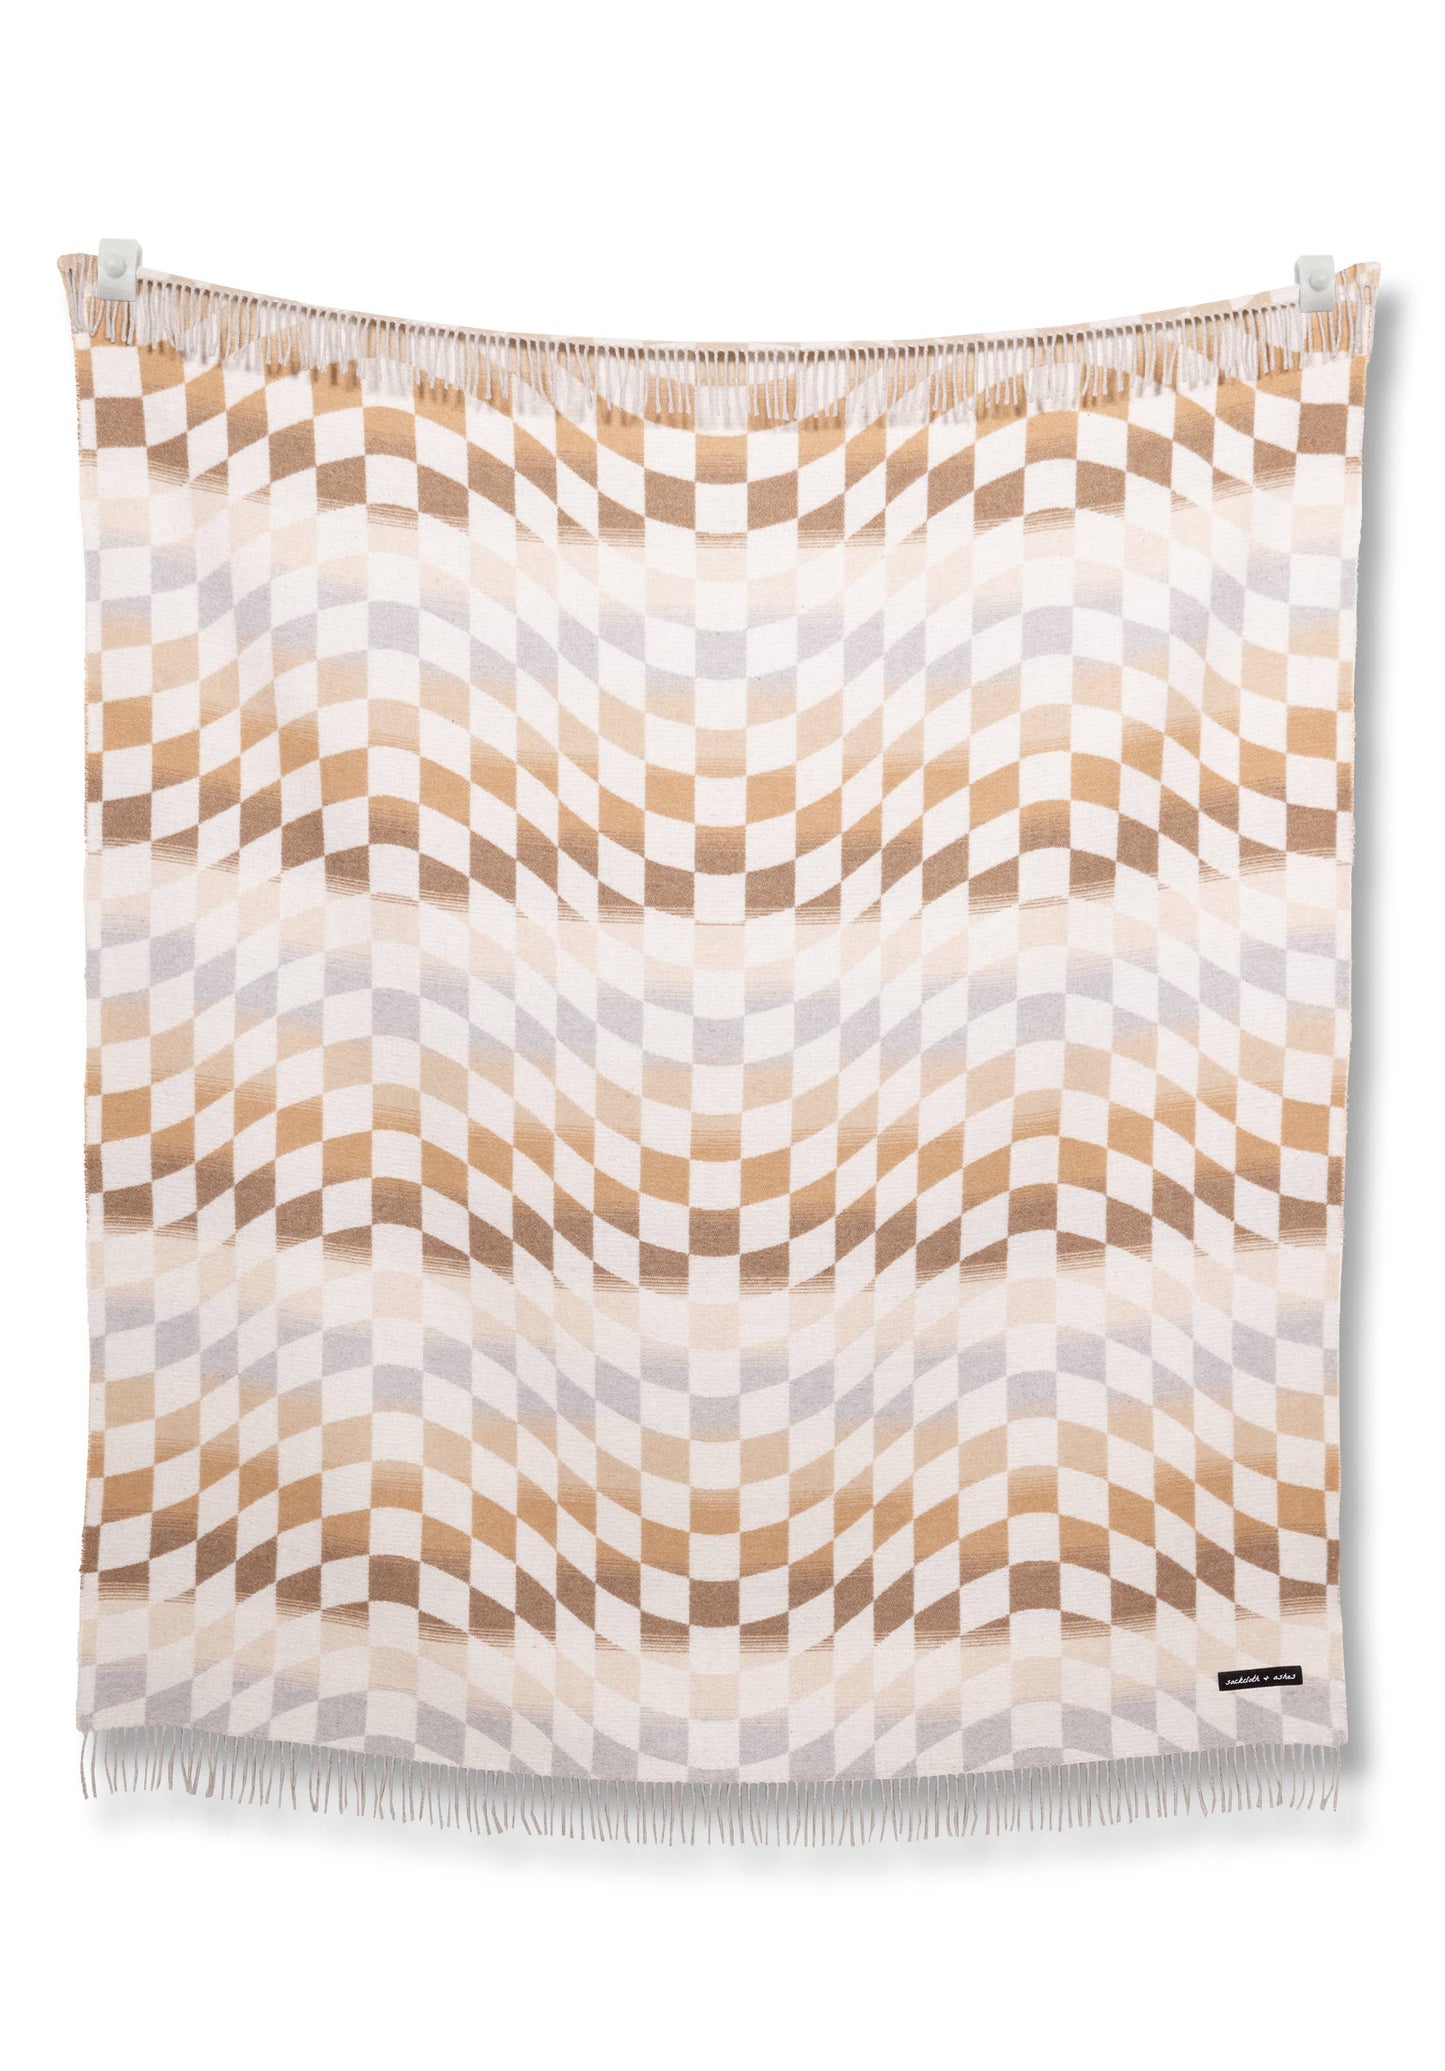 Throw Blanket - Checkered Palm Desert